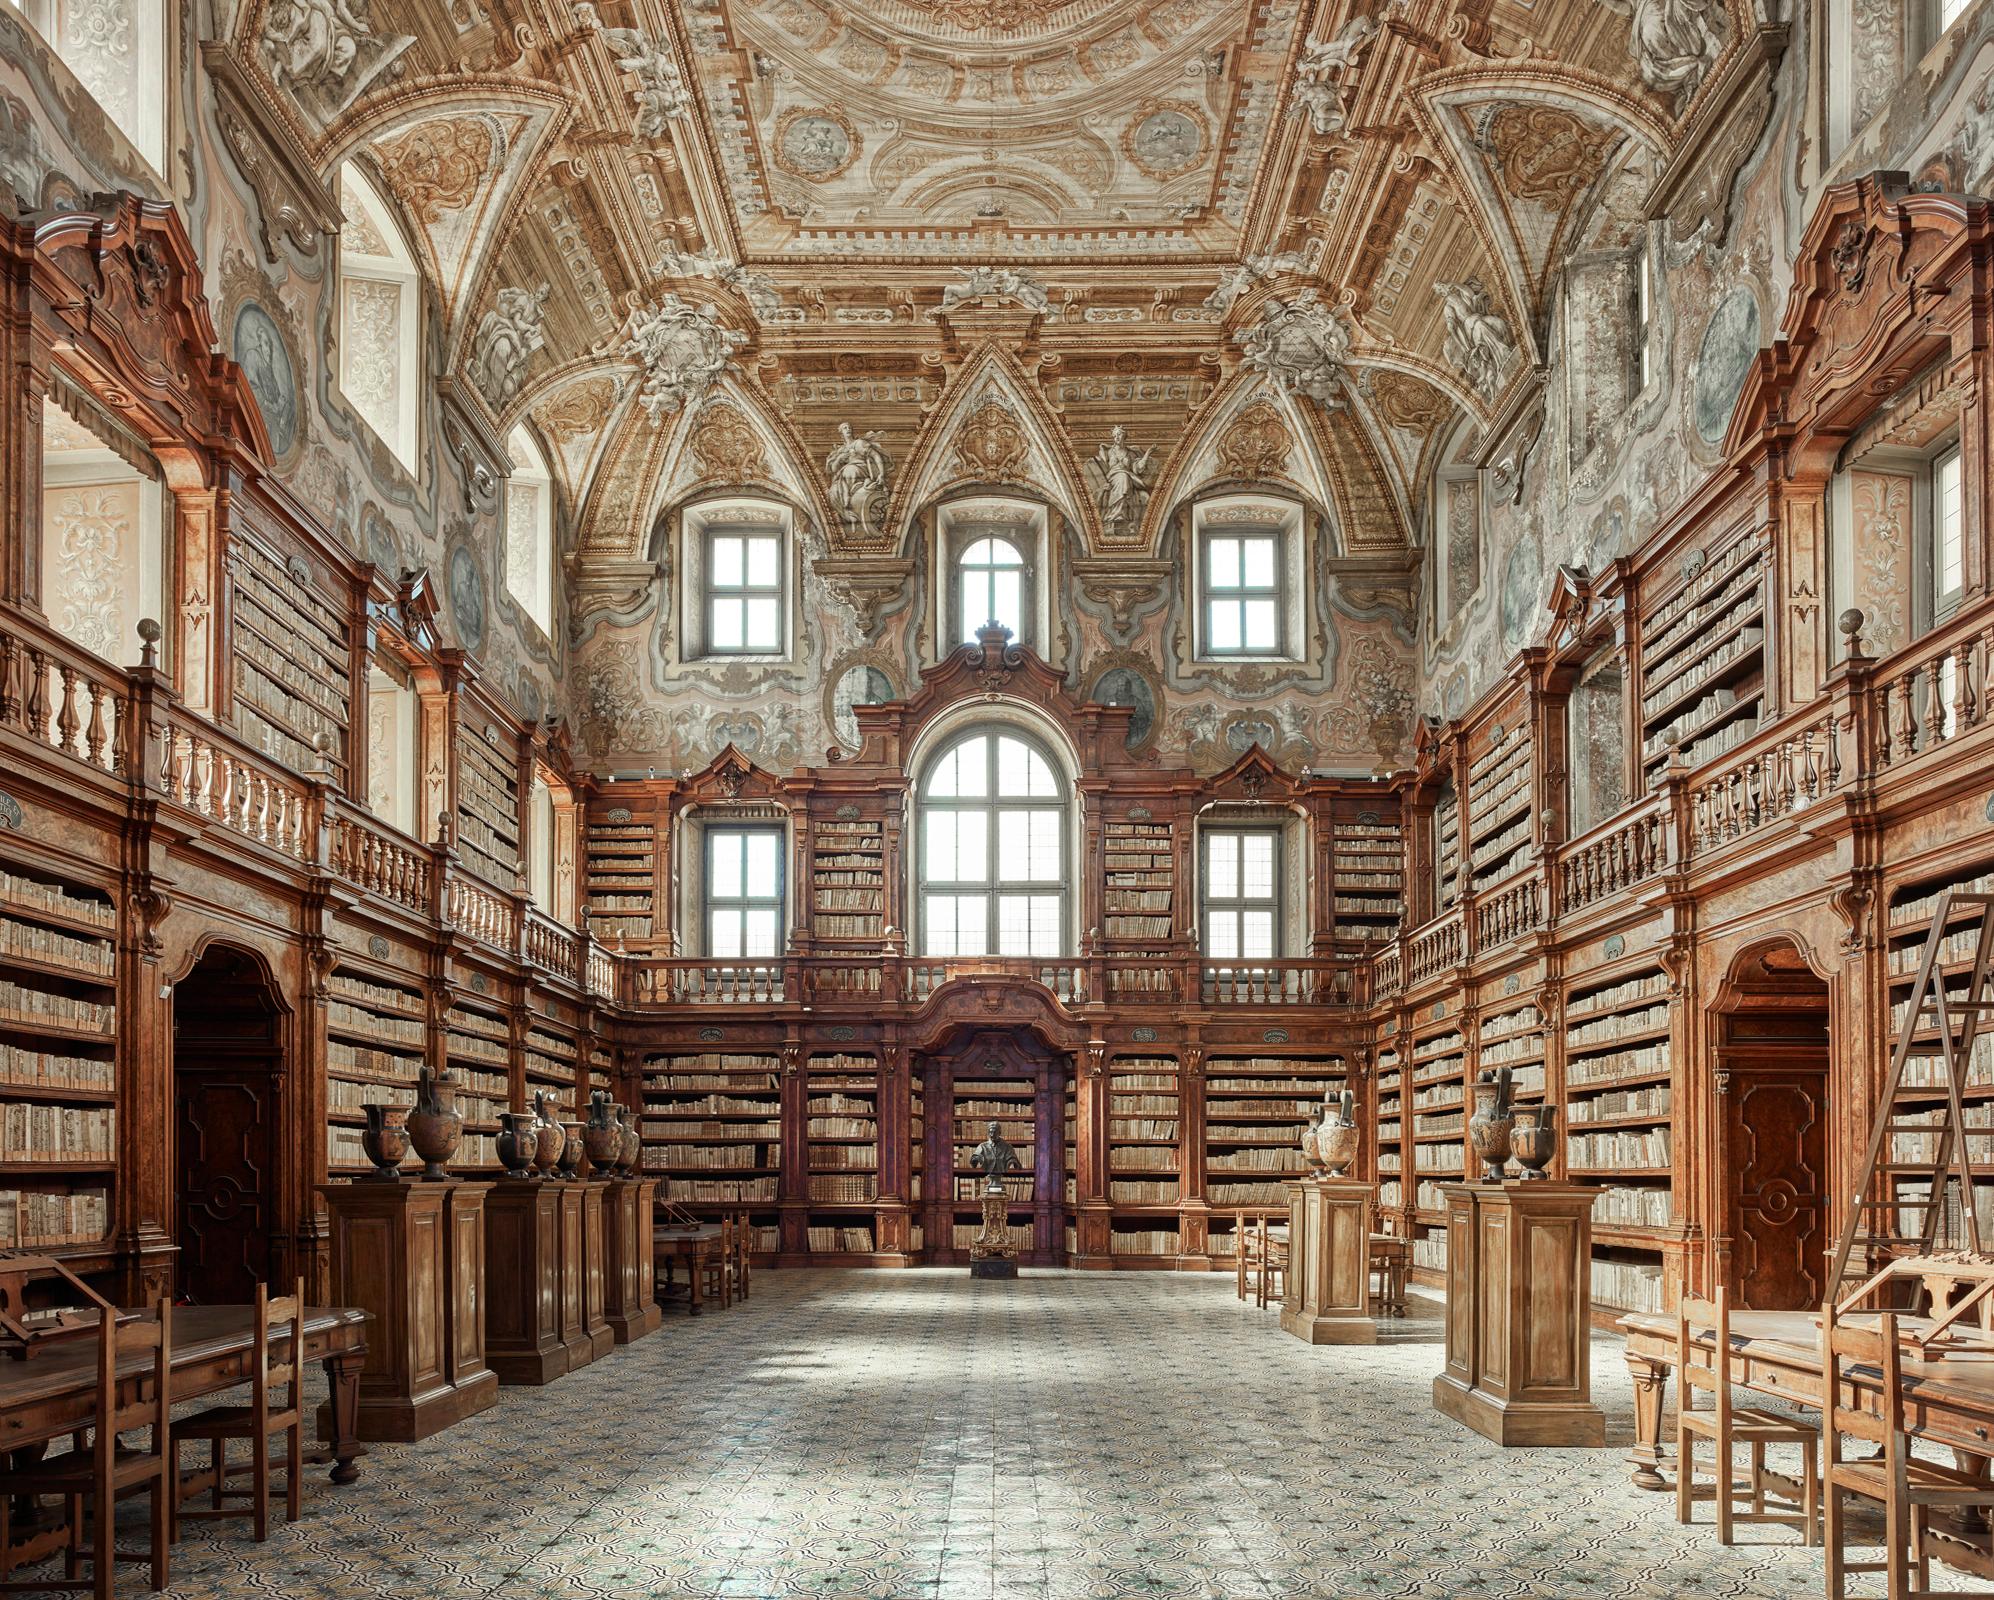 David Burdeny – Bibliothek, Napels, Italien, Fotografie 2016, Druck nach